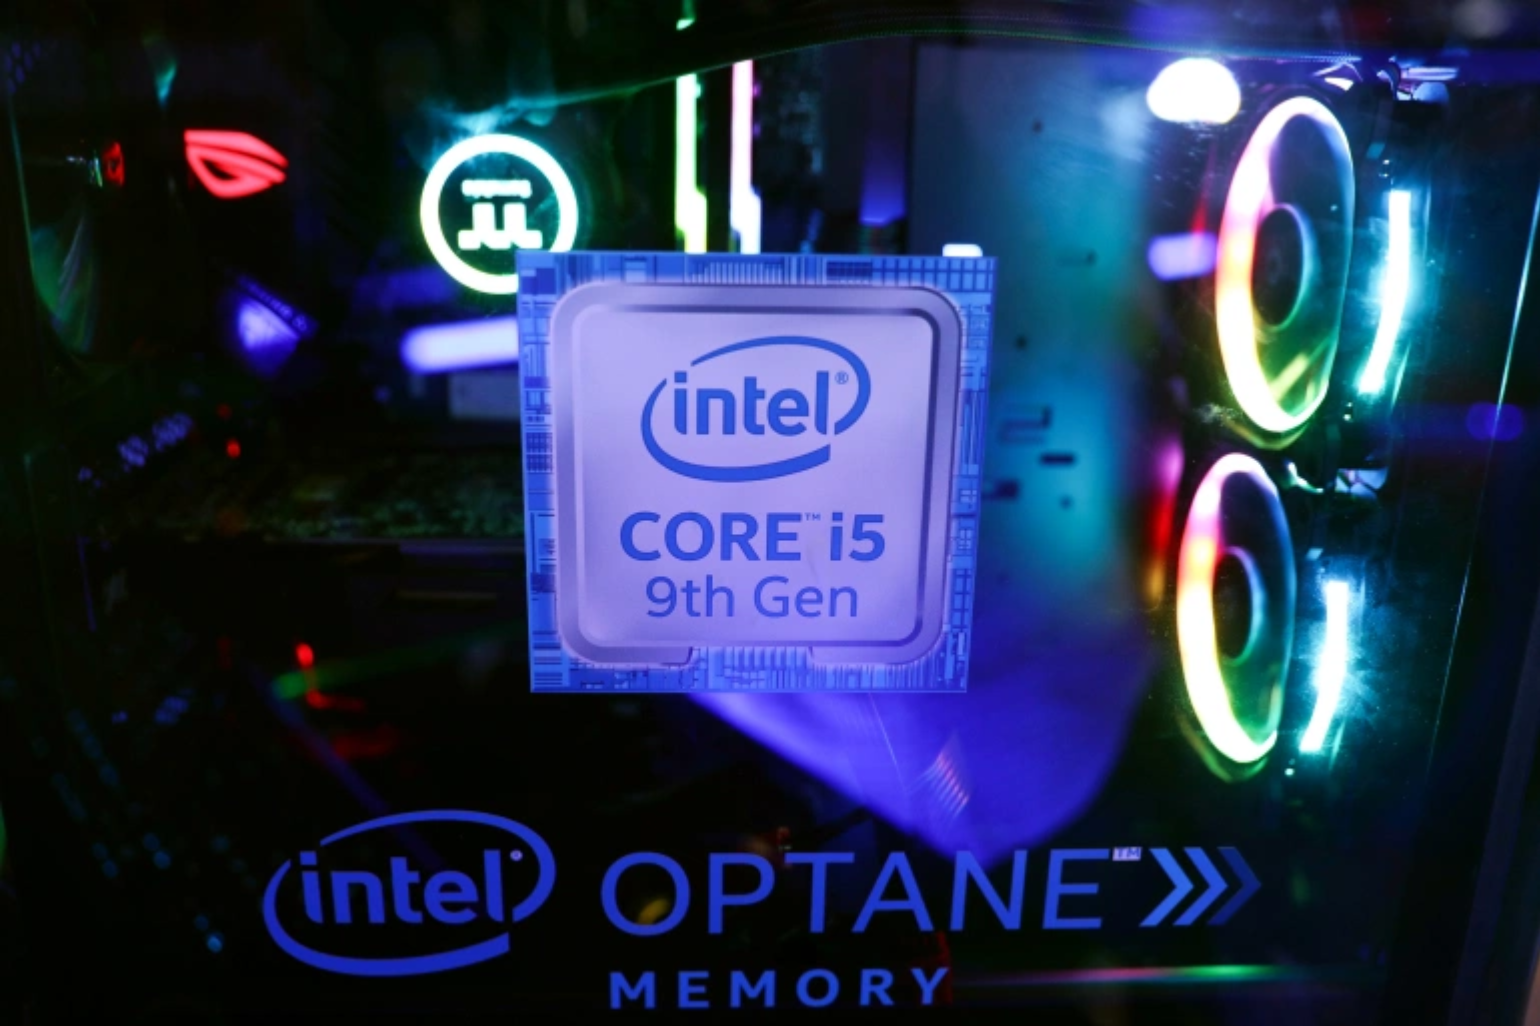 In $20bn push, Intel hopes to make US chip-making great again | Aljazeera